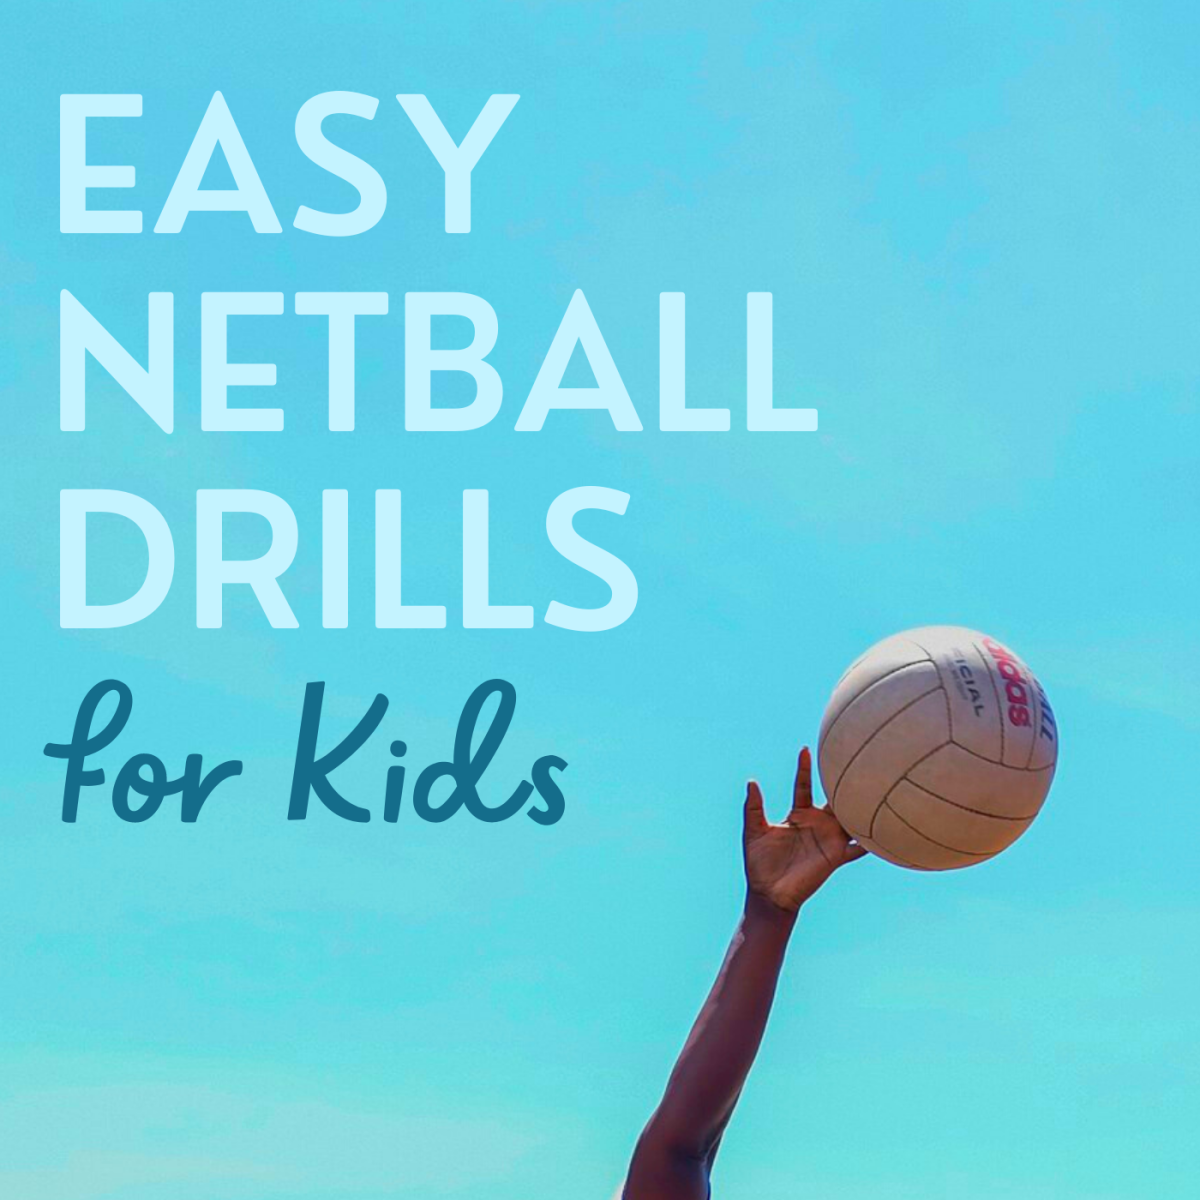 Five Fun Netball Drills for Kids